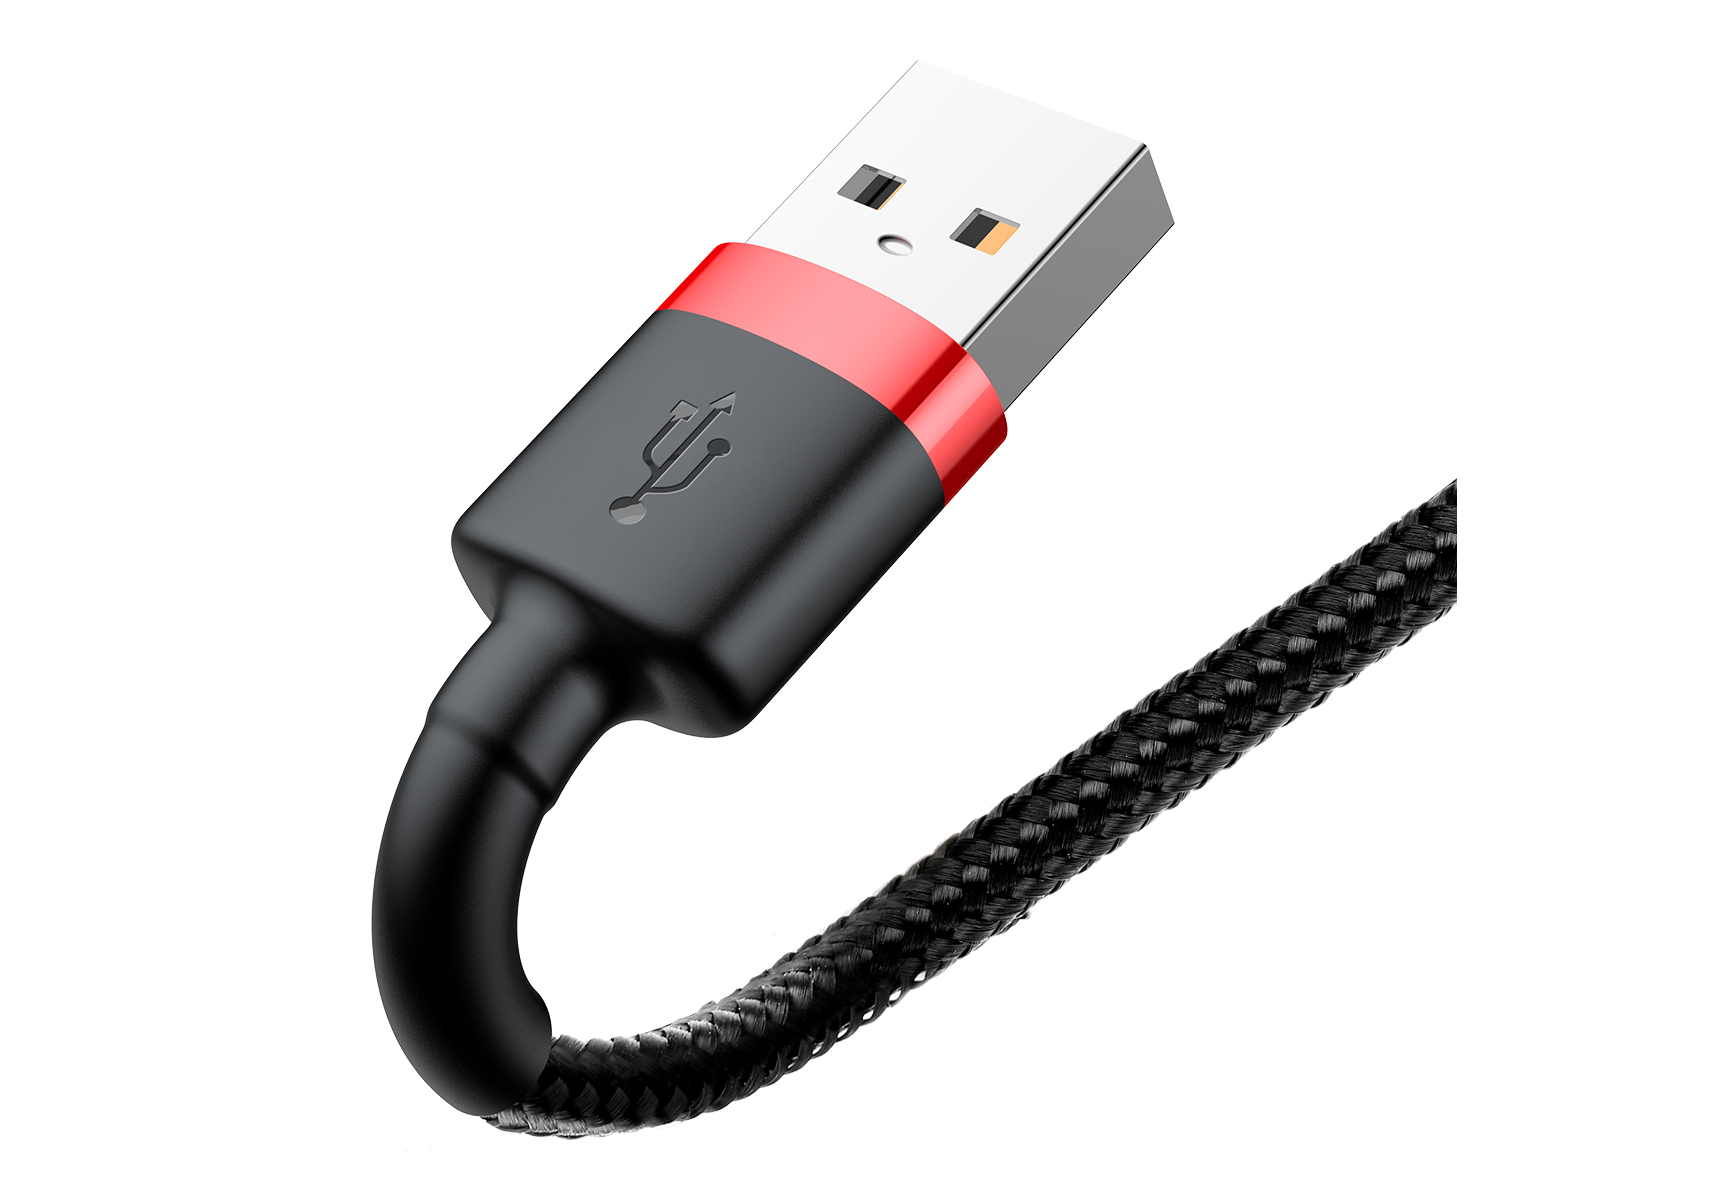 کابل USB به Lightning بیسوس مدل Calklf A19